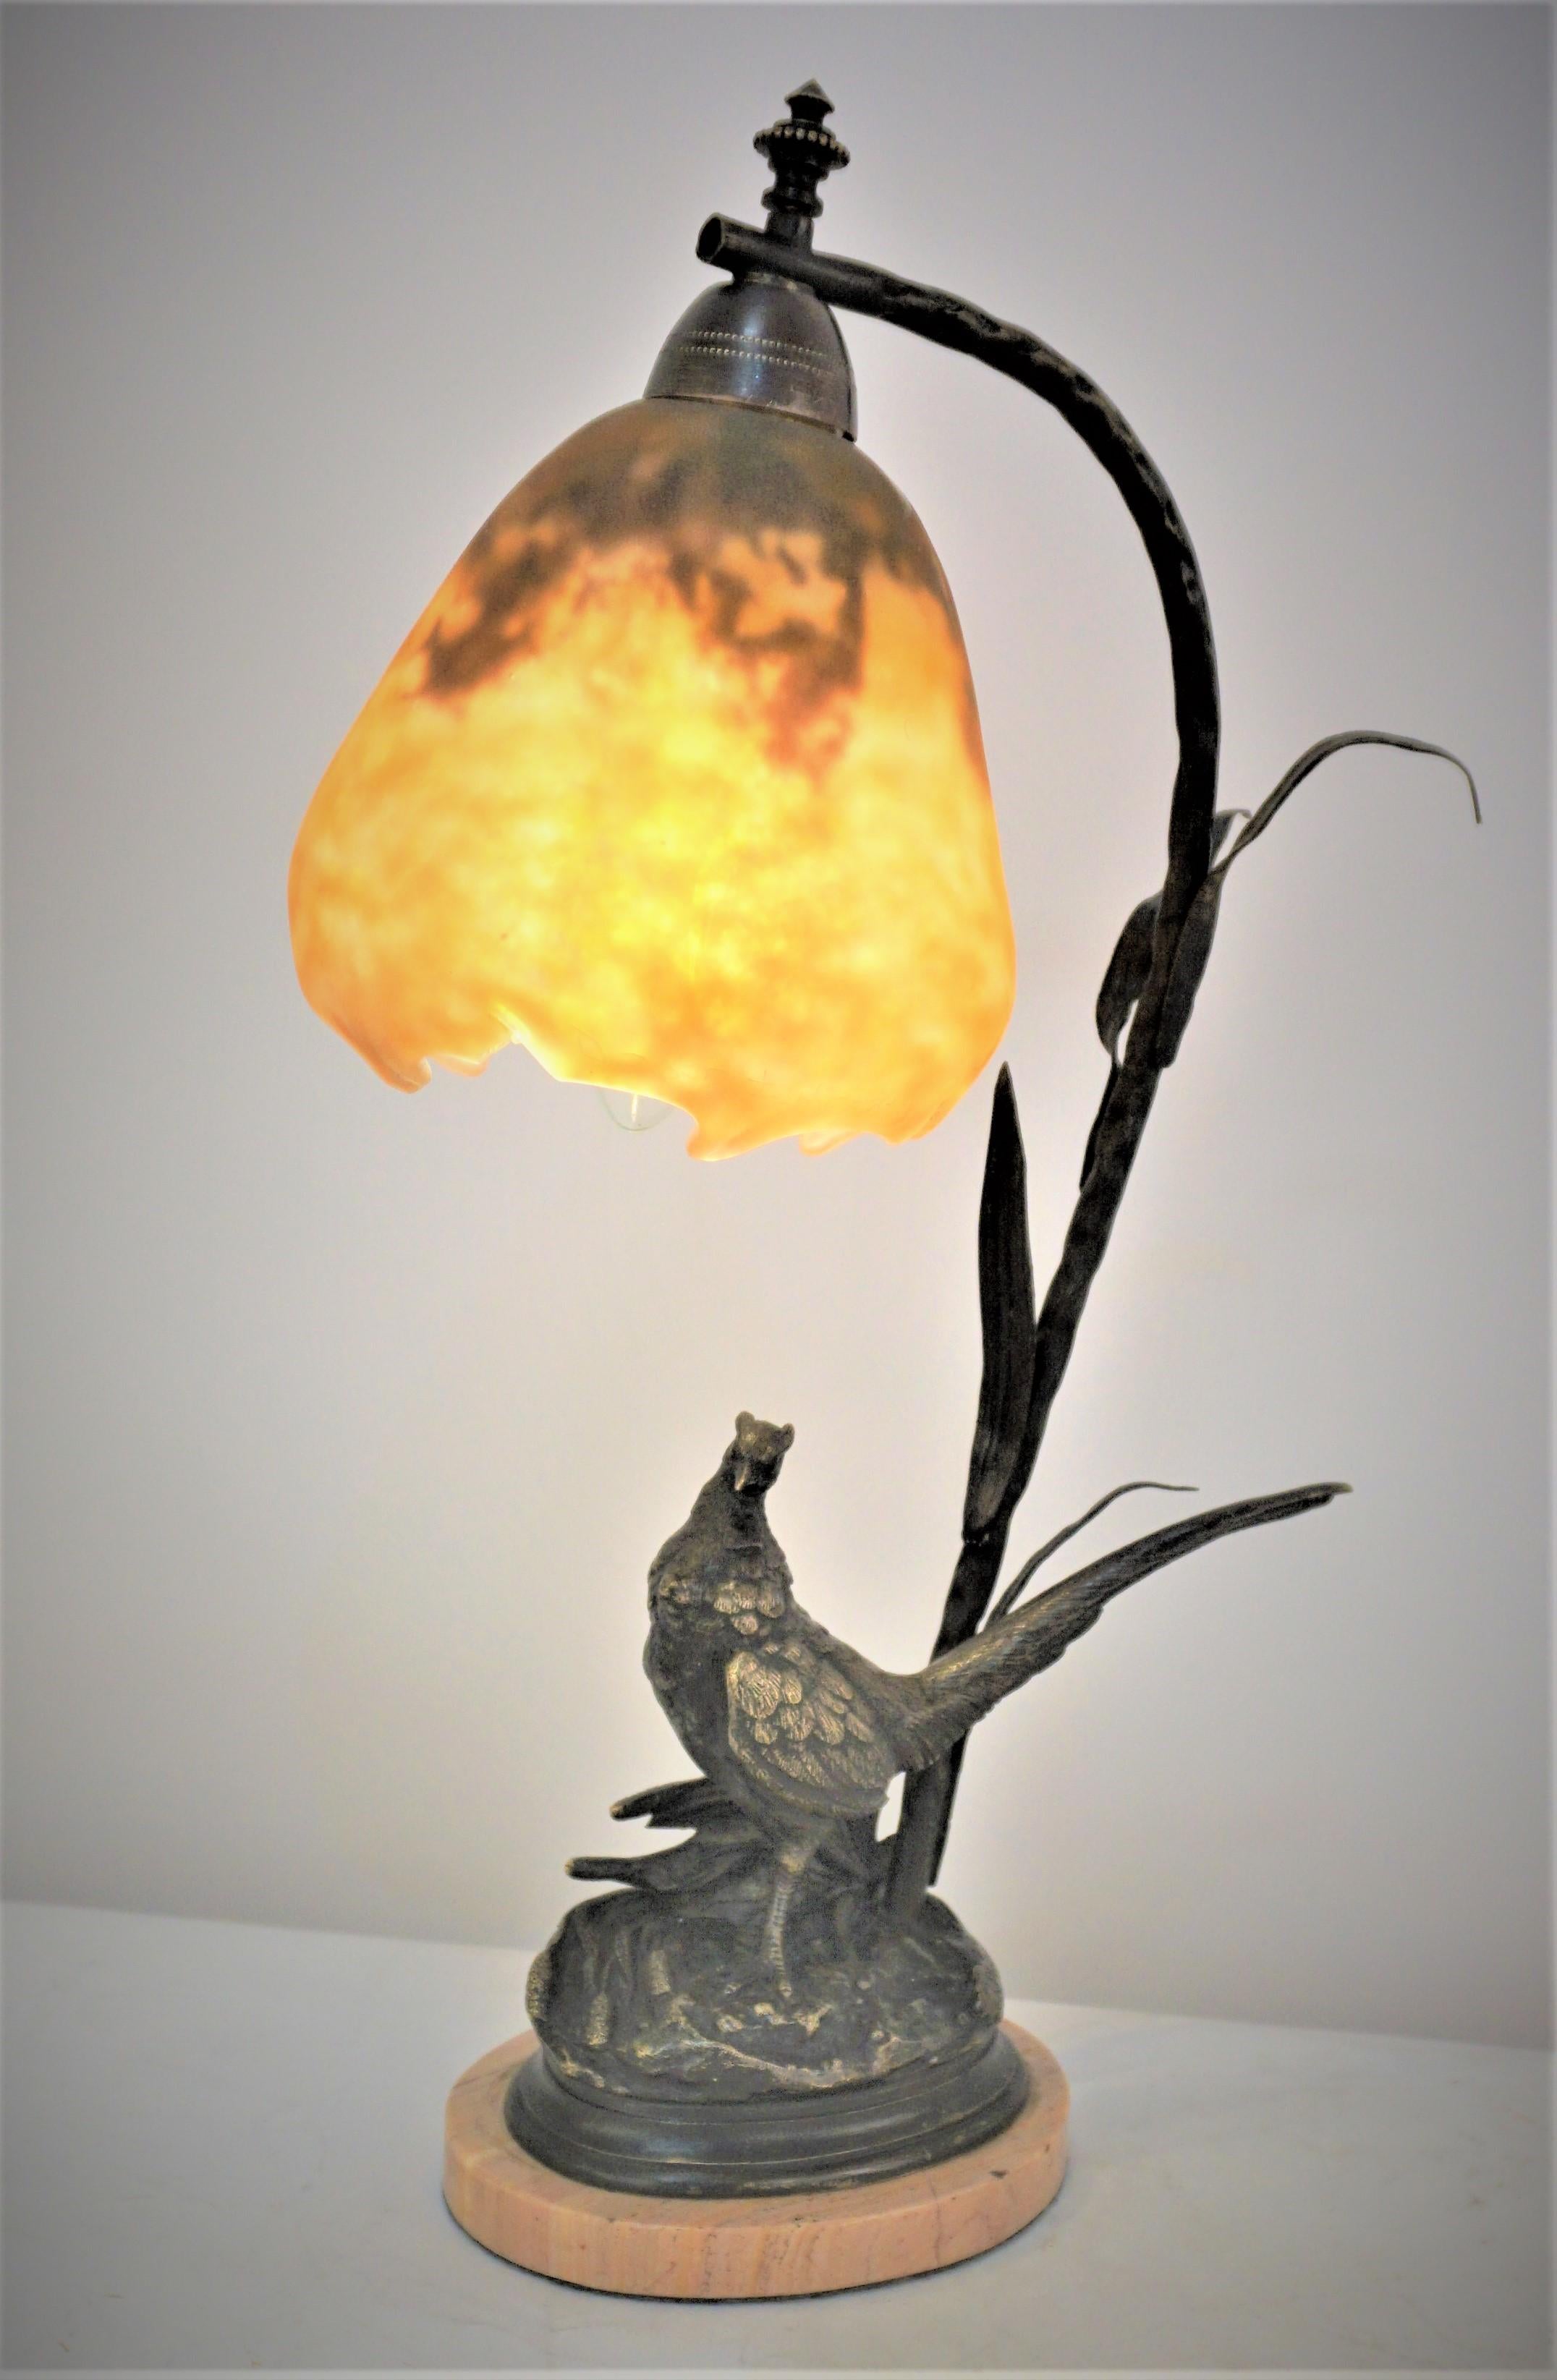 Beautiful bronze bird sculpture Lamp with hand blow glass shade by Daum.